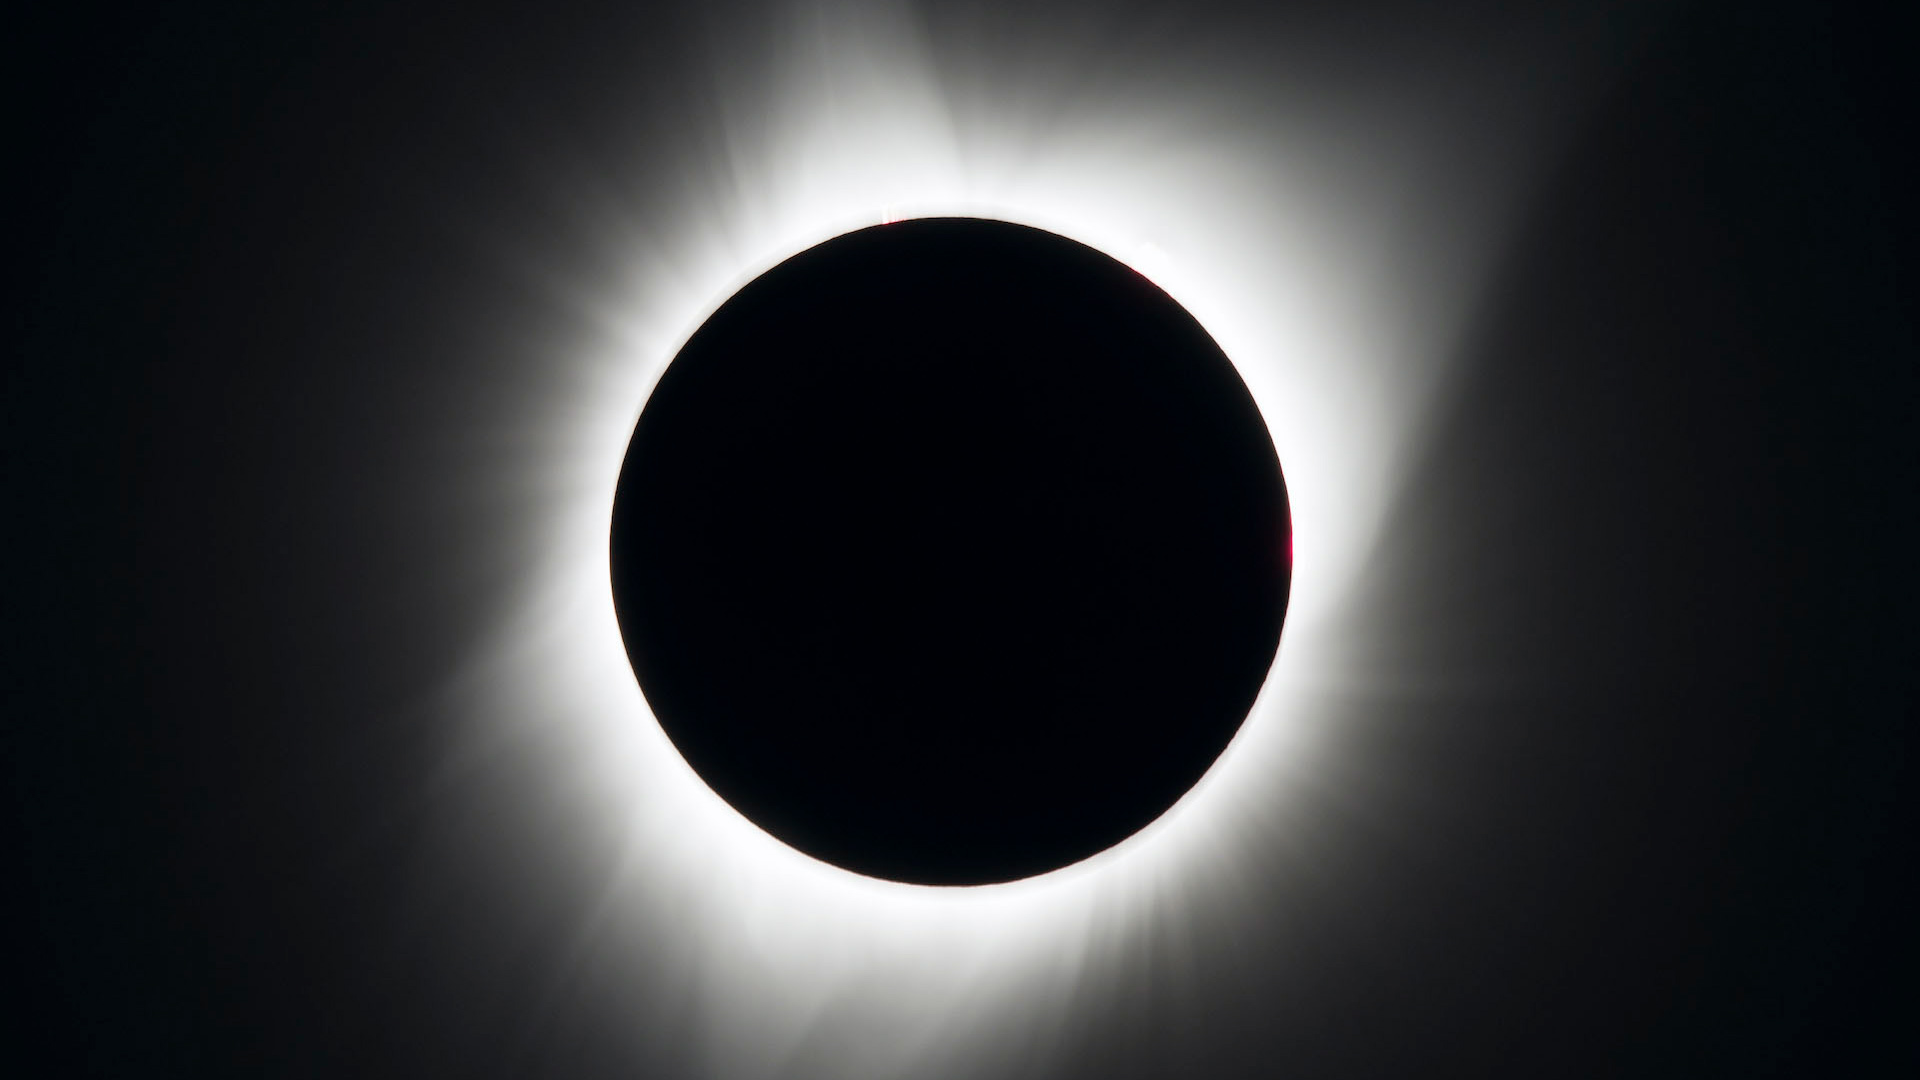  Solar eclipse, 2017